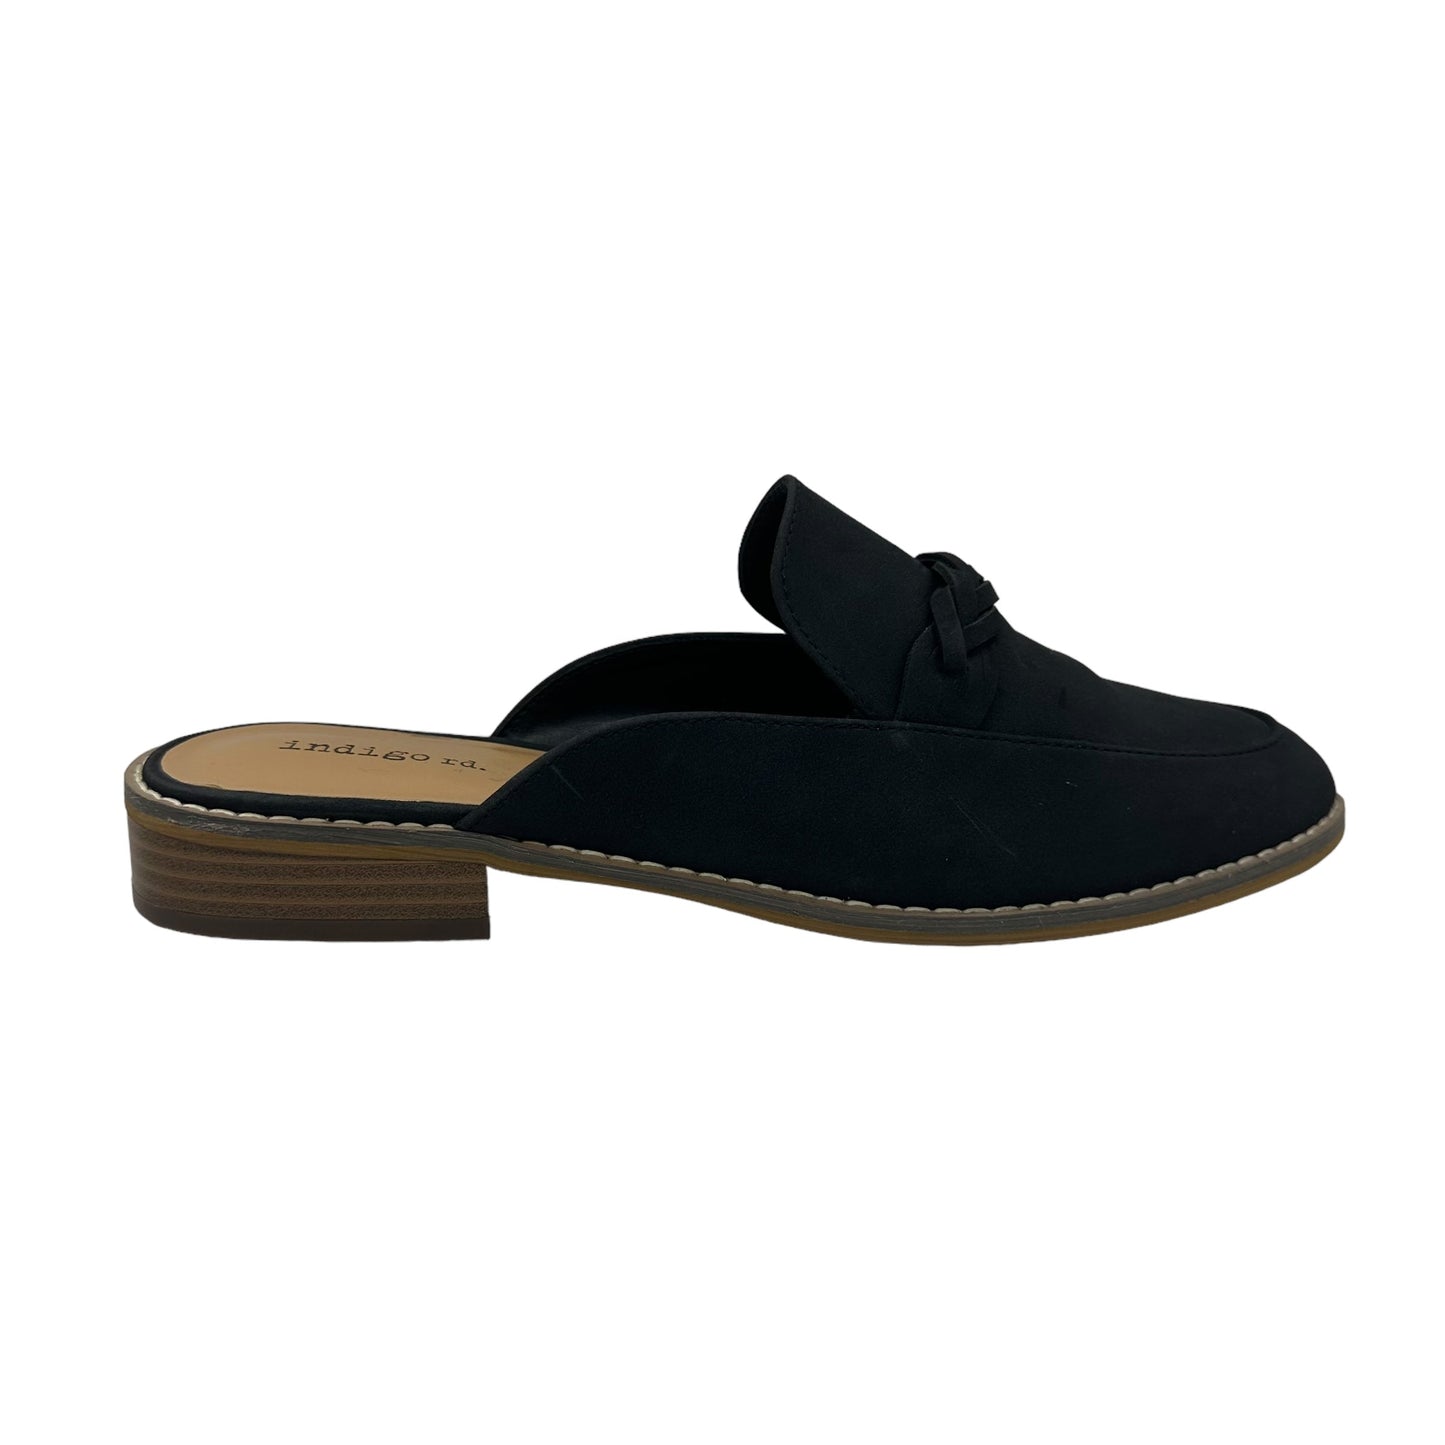 Black Shoes Flats Indigo Rd, Size 8.5